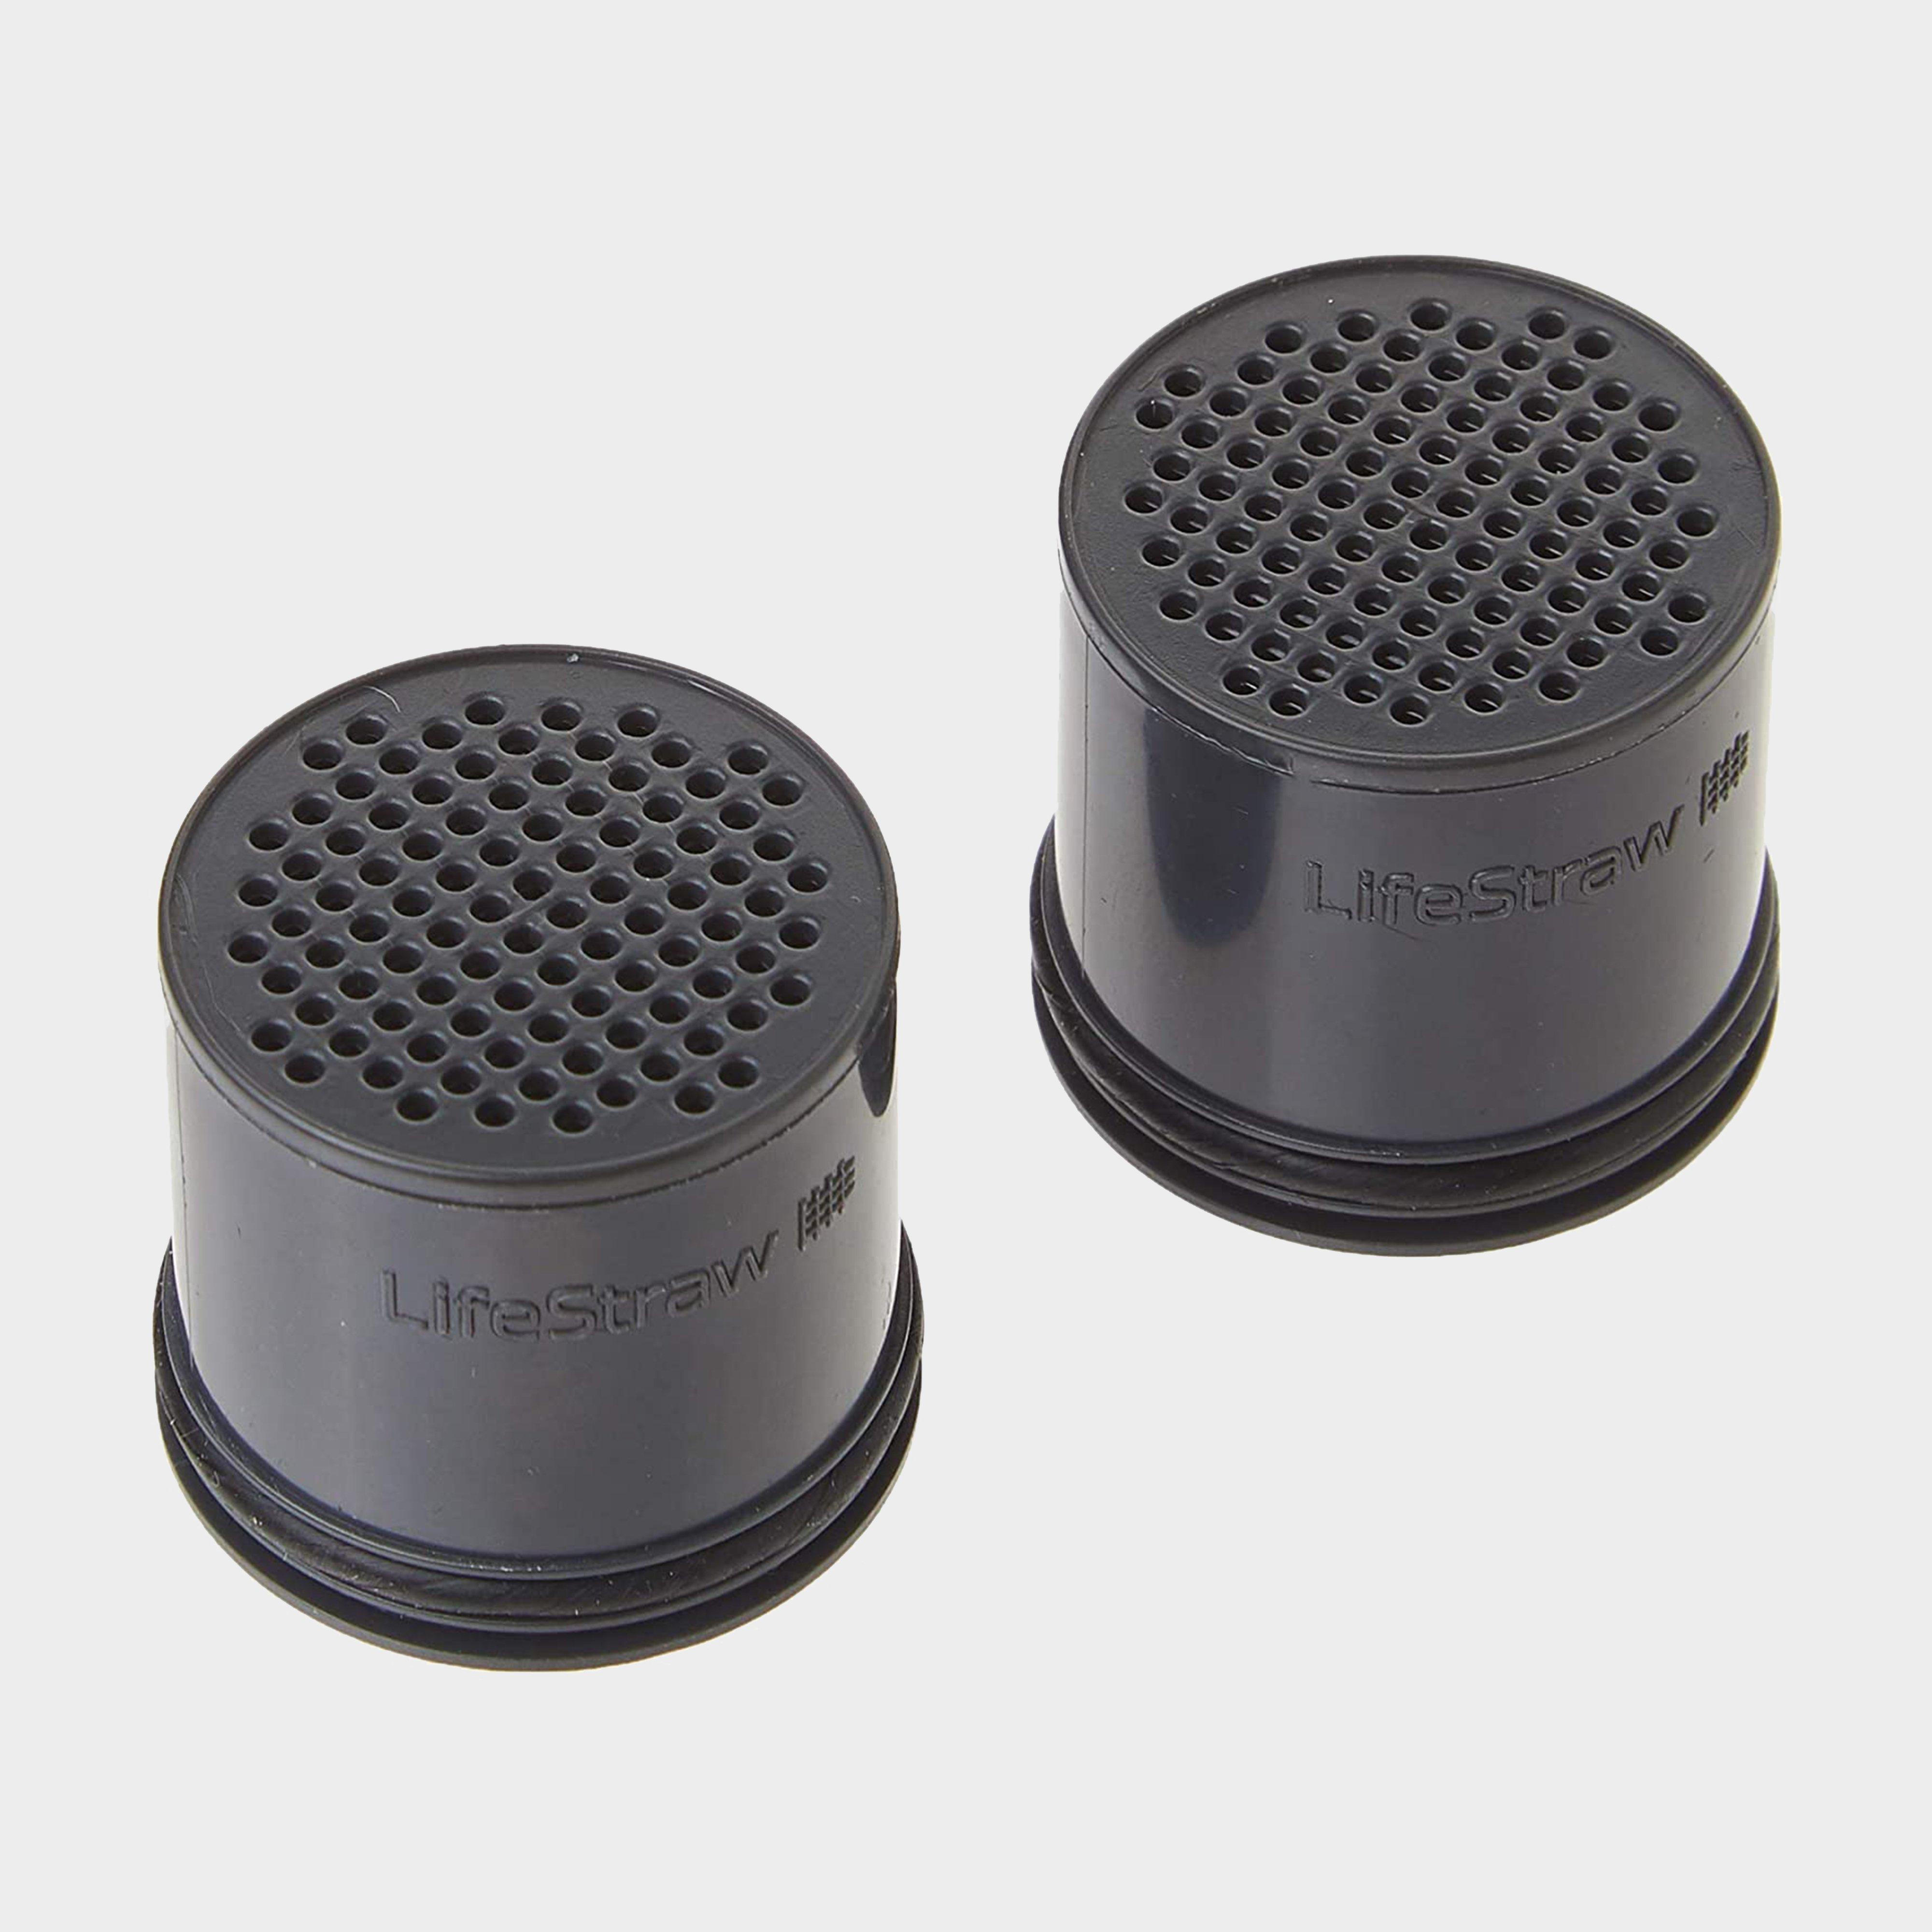 Lifestraw Carbon Filter Capsule (replacement) - Pack Of 2 - Black/black  Black/black